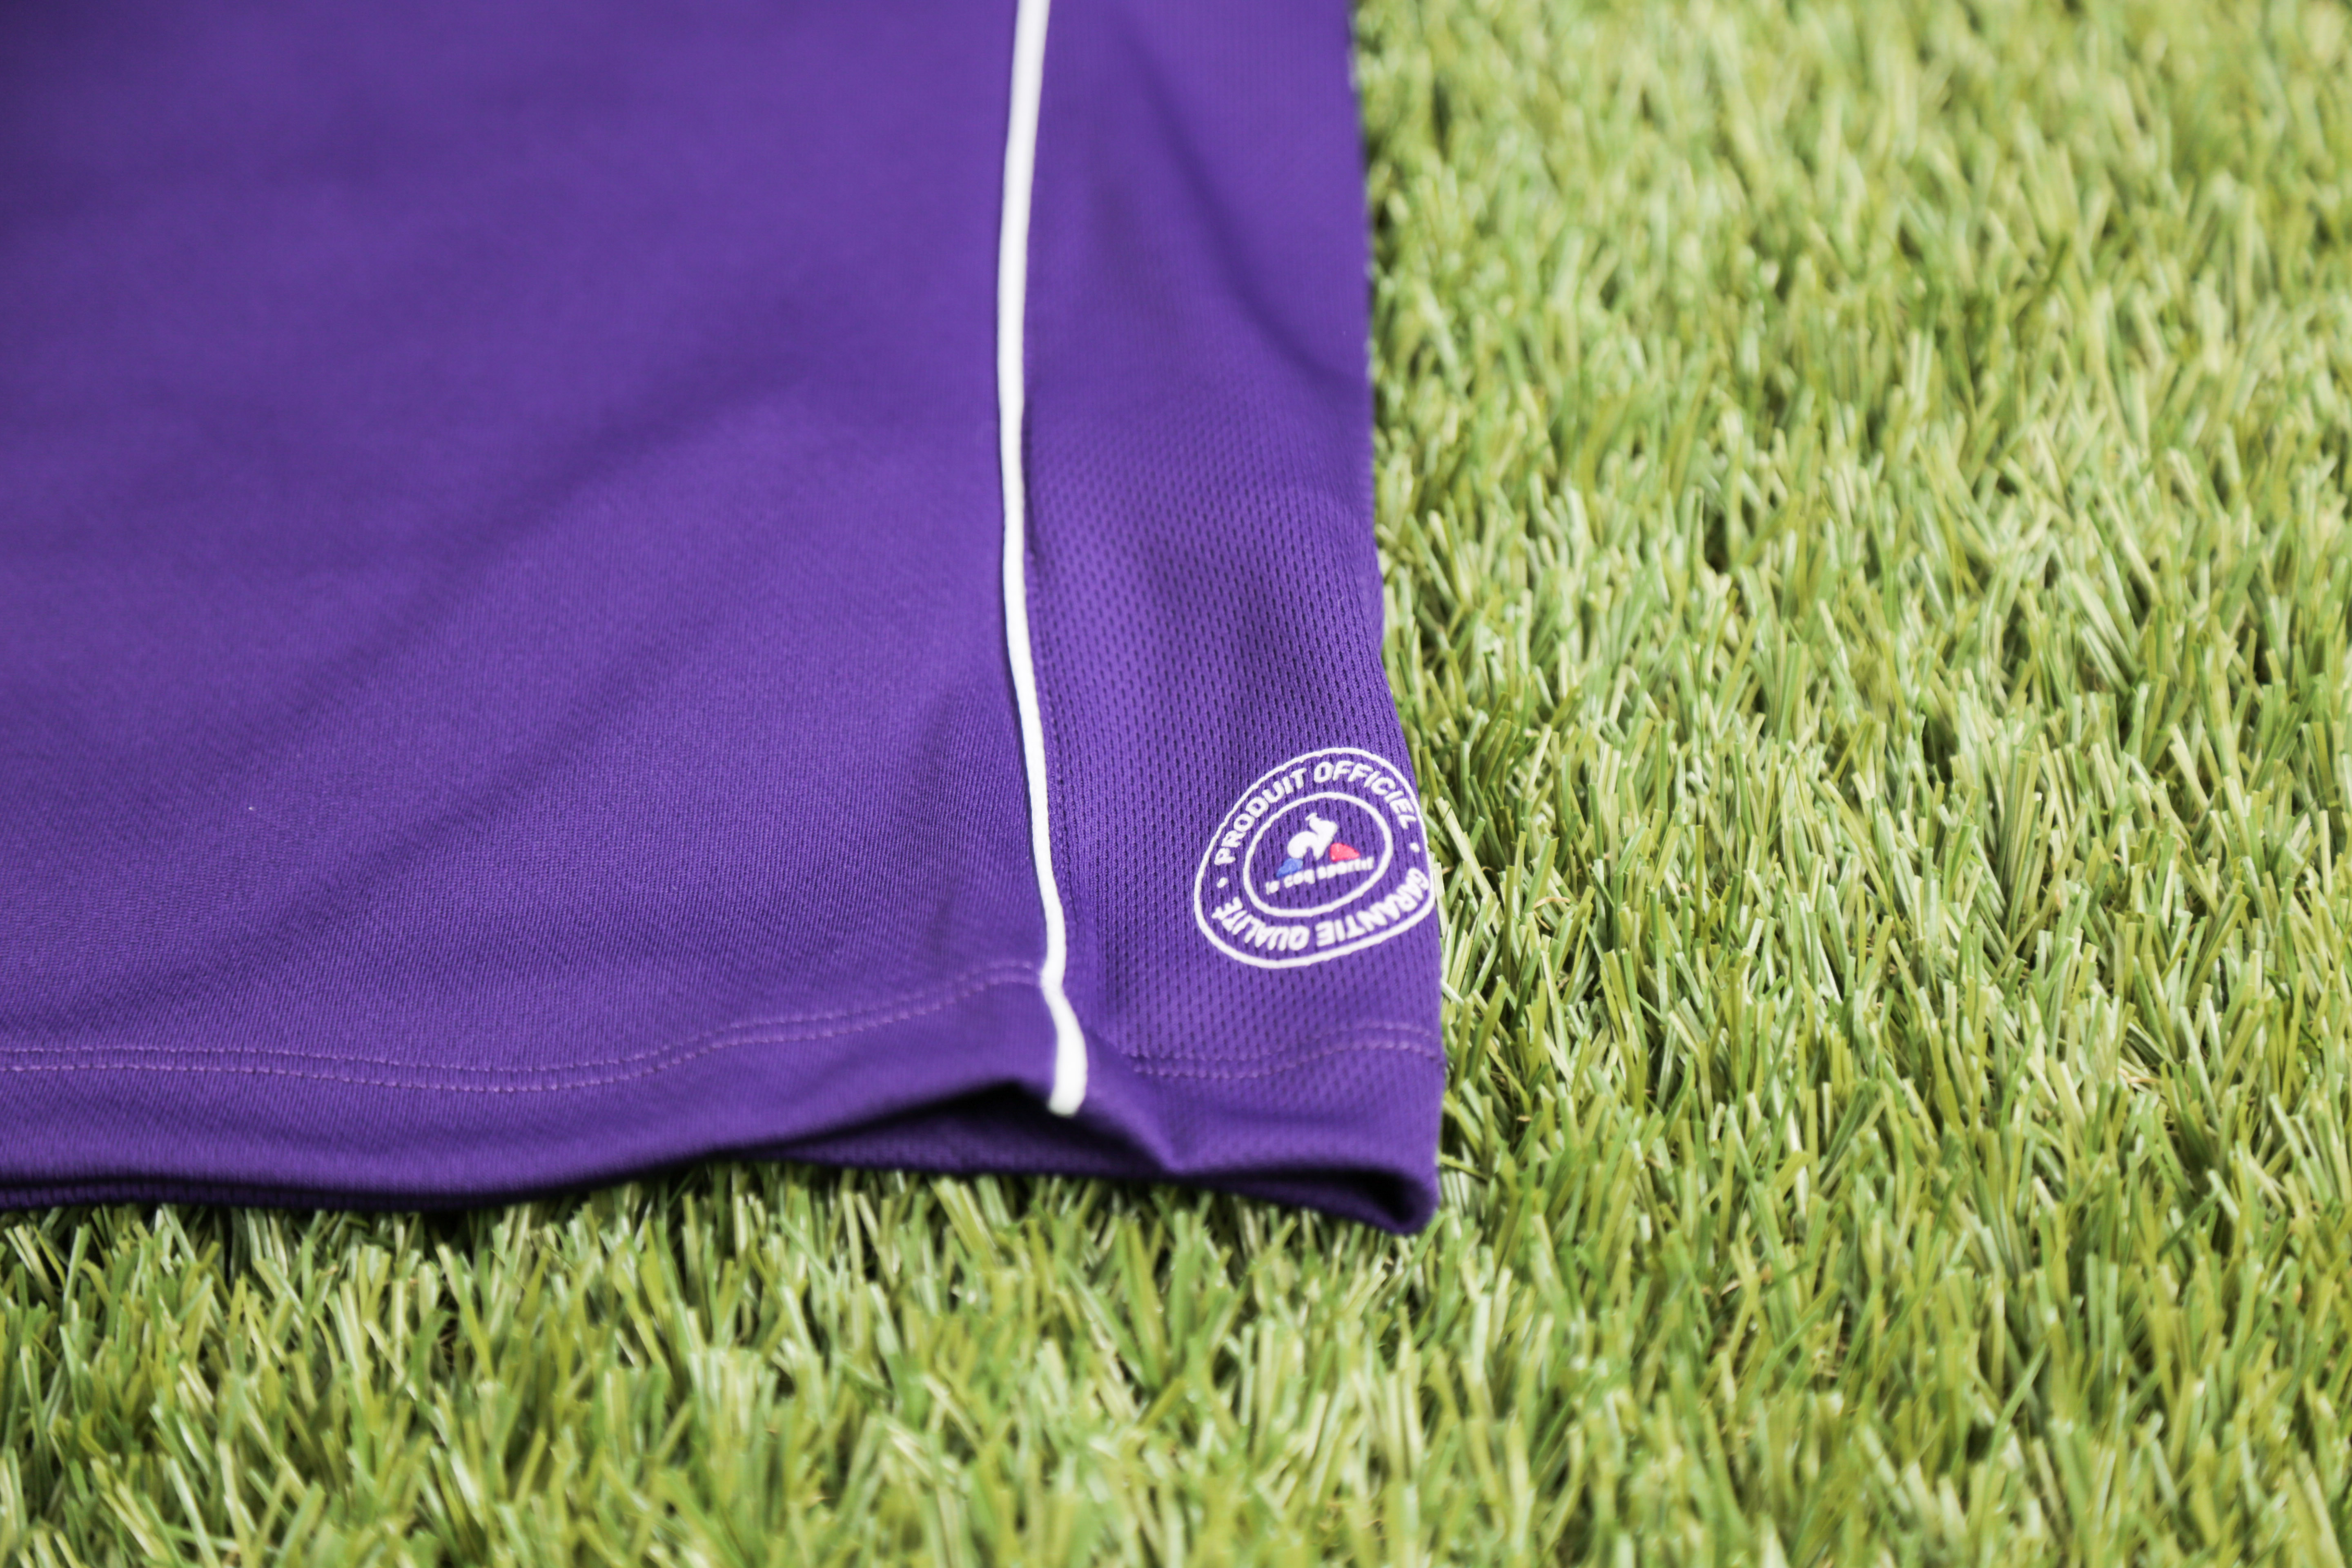 REVIEW: Fiorentina Le Coq Sportif 2015-16 home jersey